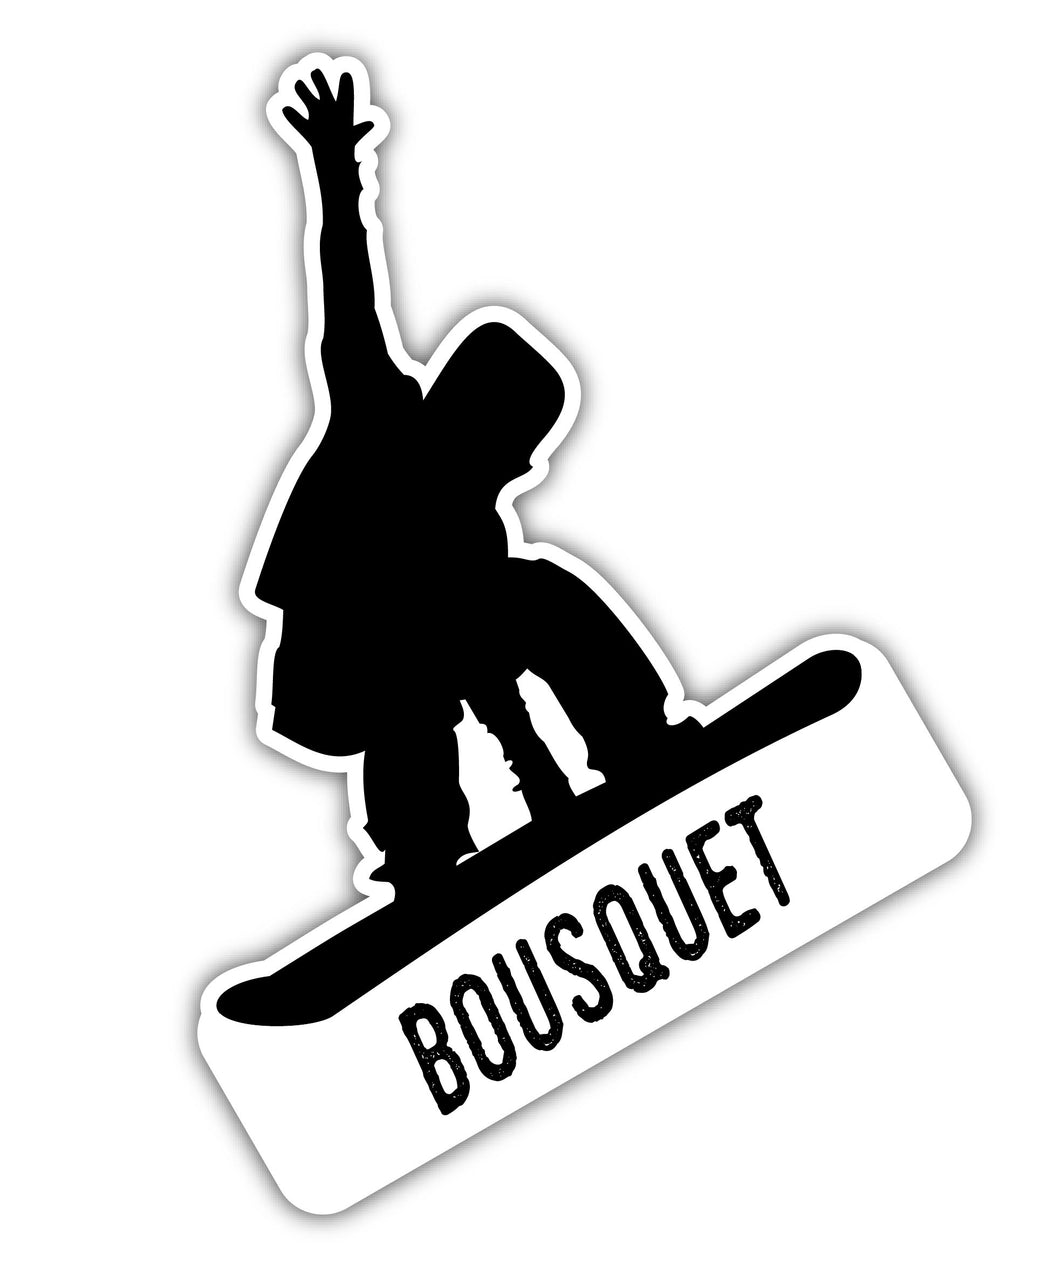 Bousquet Massachusetts Ski Adventures Souvenir Approximately 5 x 2.5-Inch Vinyl Decal Sticker Goggle Design